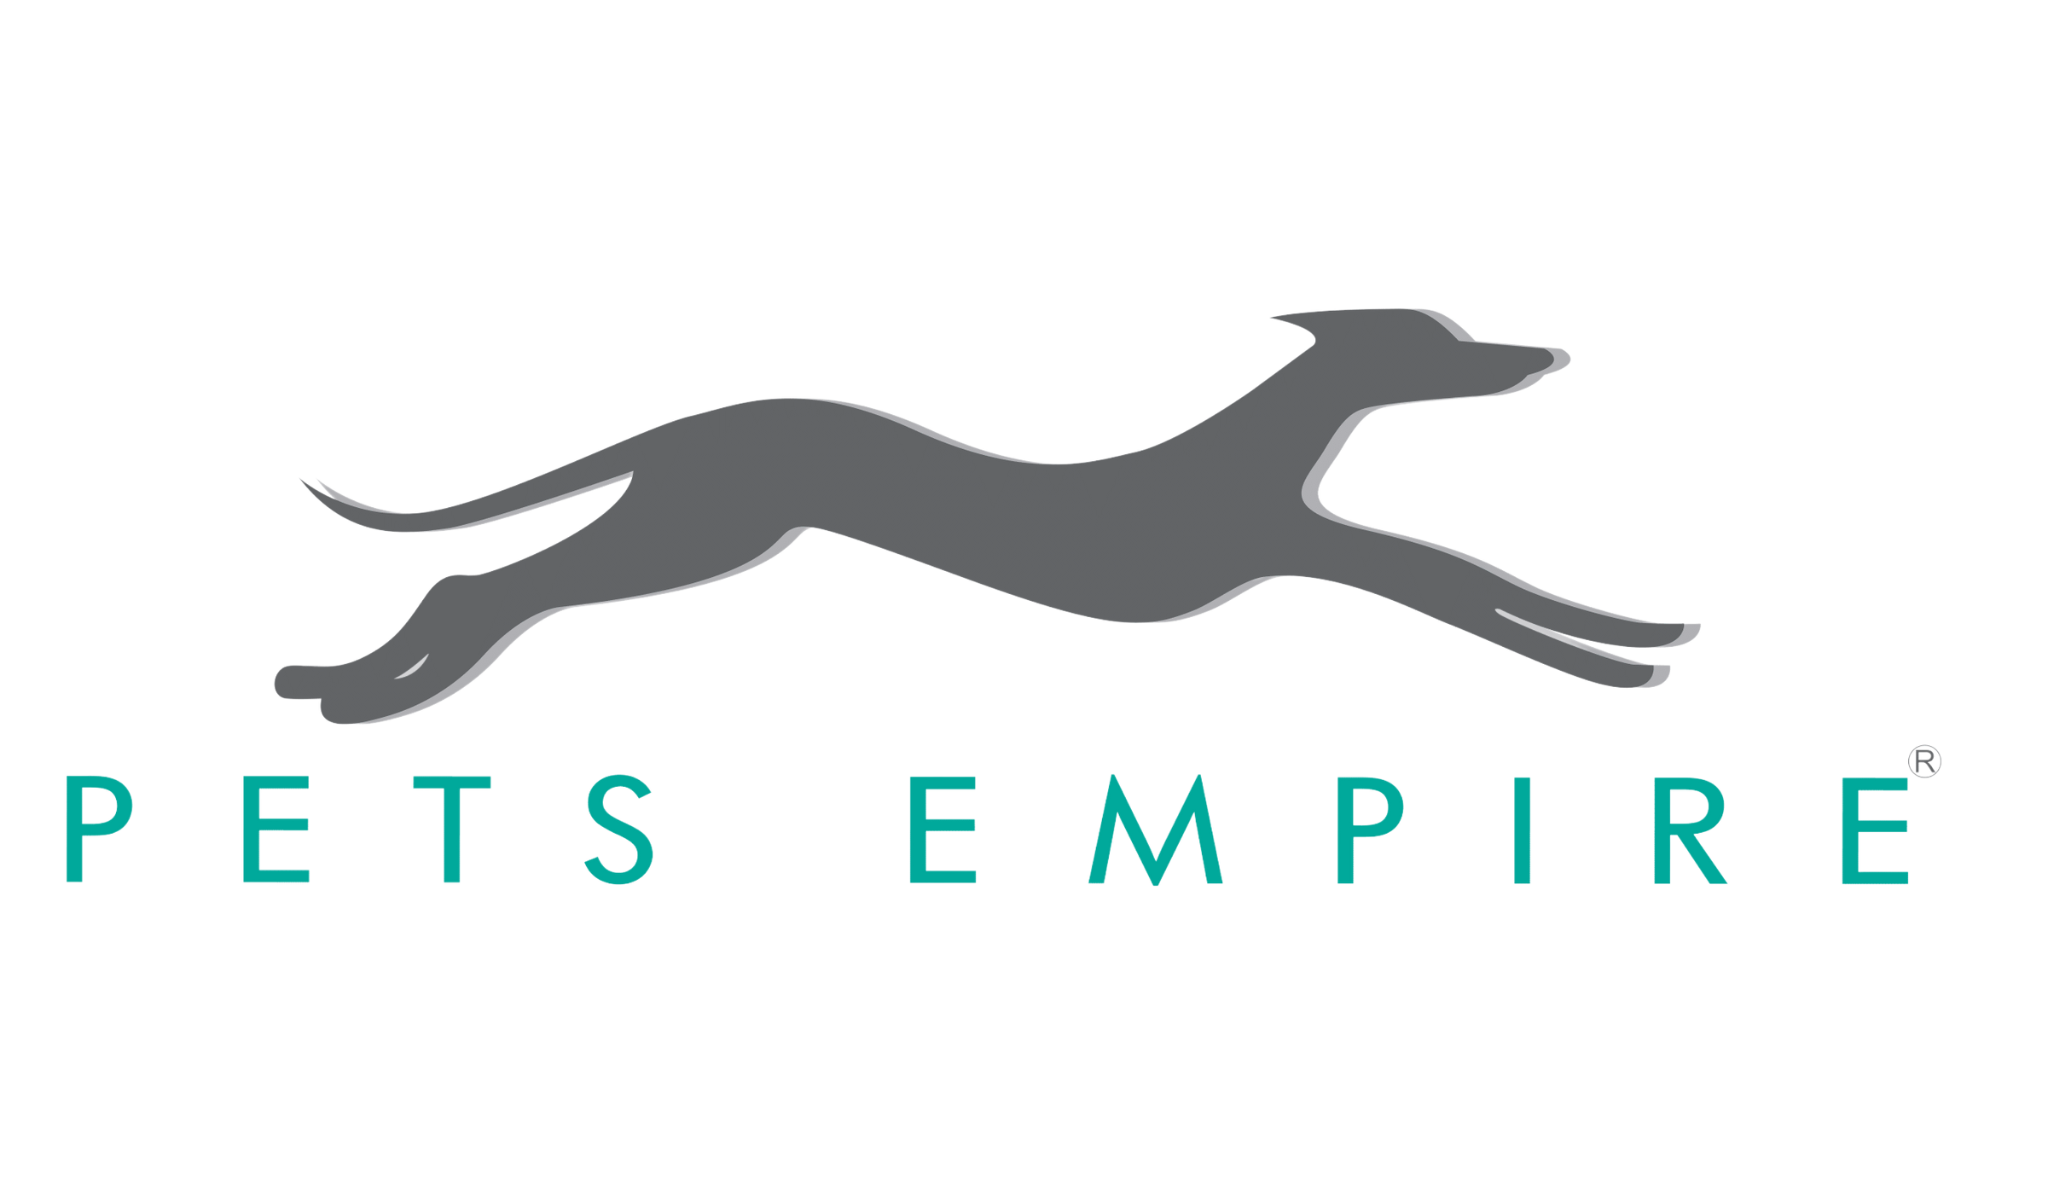 Empire Pet